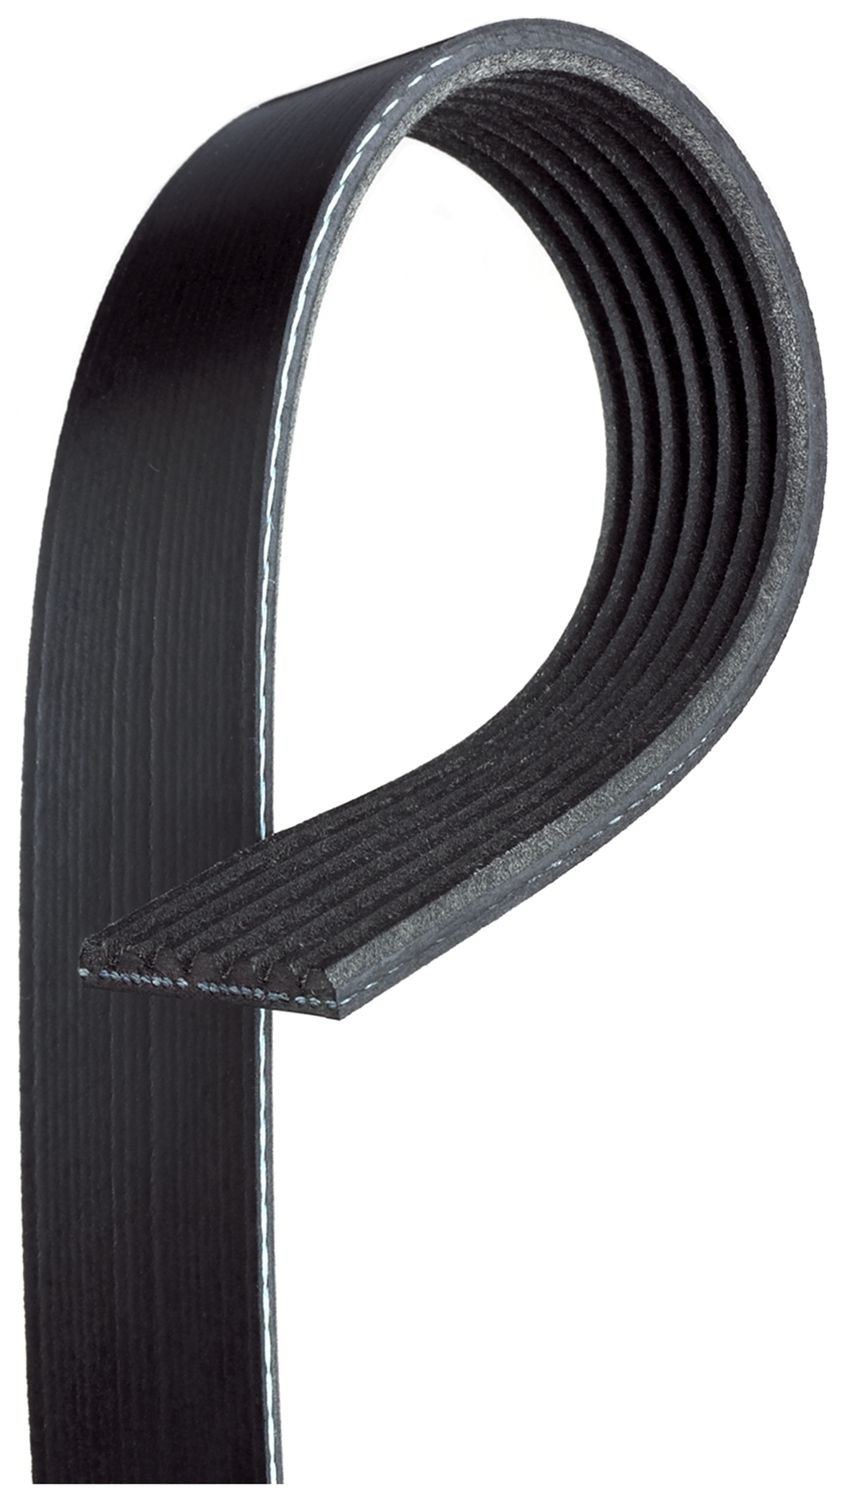 GATES 7PK1325 Serpentine belt 1325mm, 7, G-Force™ C12™ CVT Belt